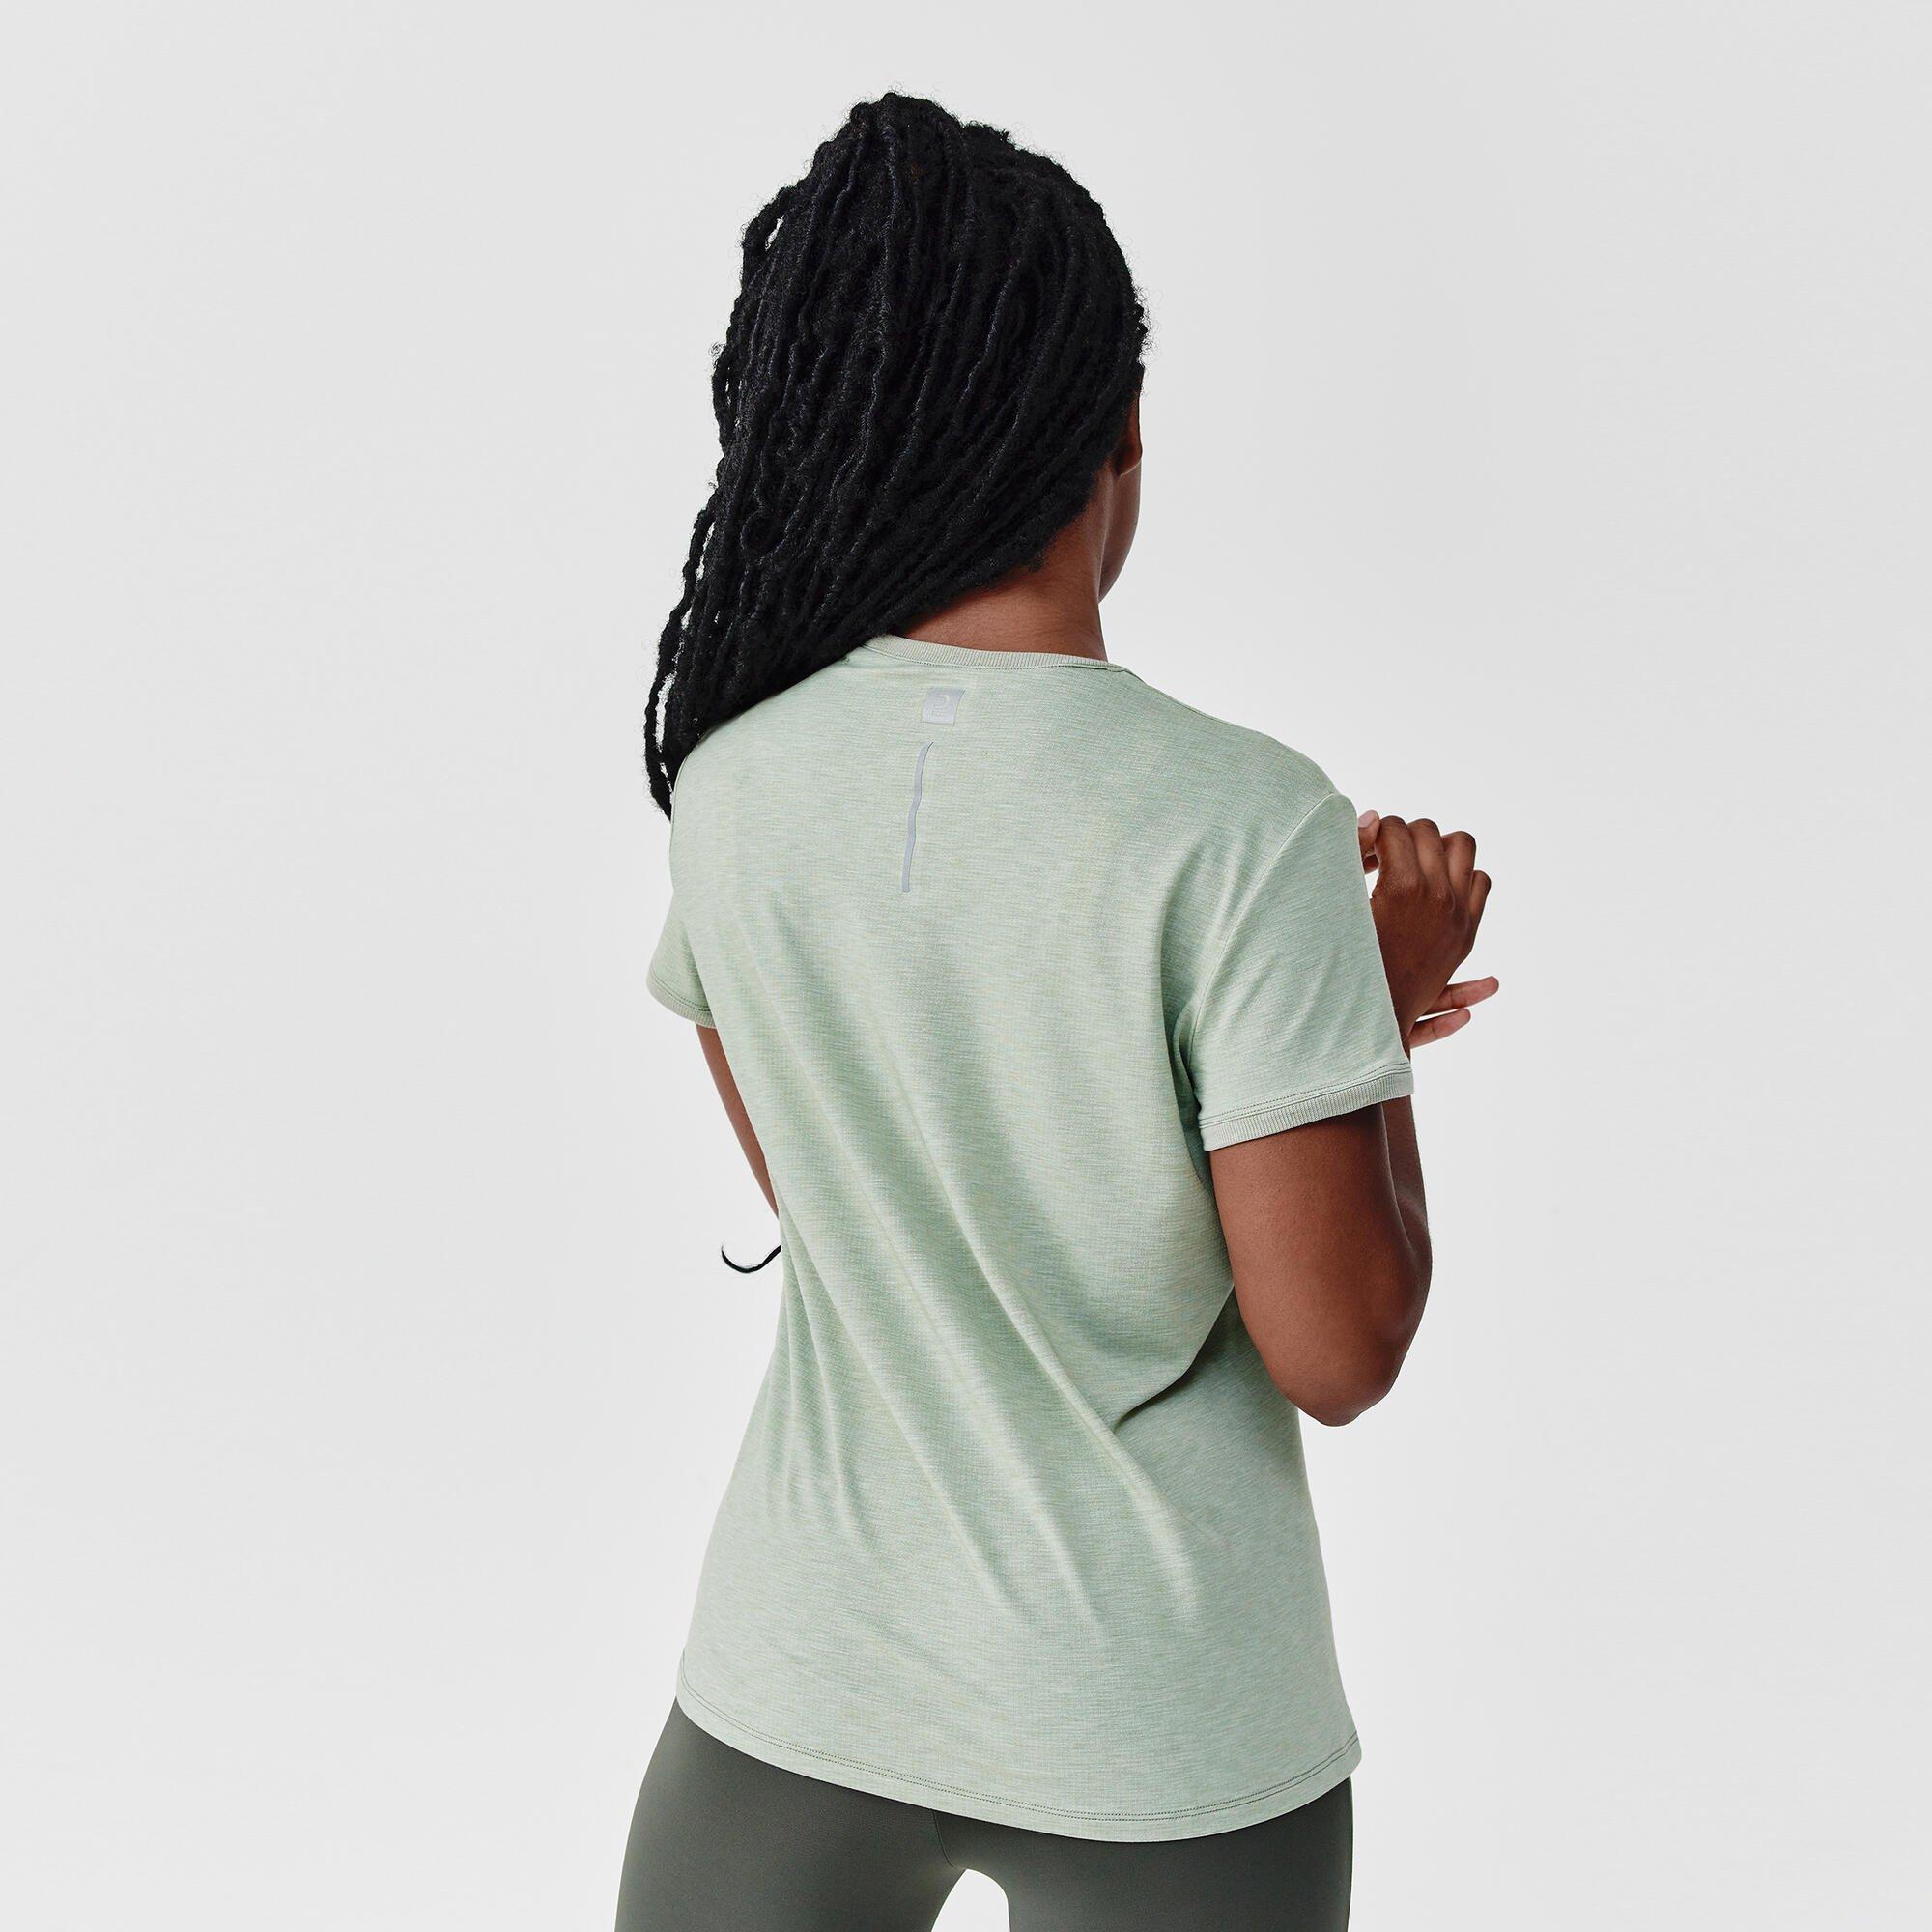 T-Shirts | Decathlon Soft And Breathable Running T-Shirt | Kalenji